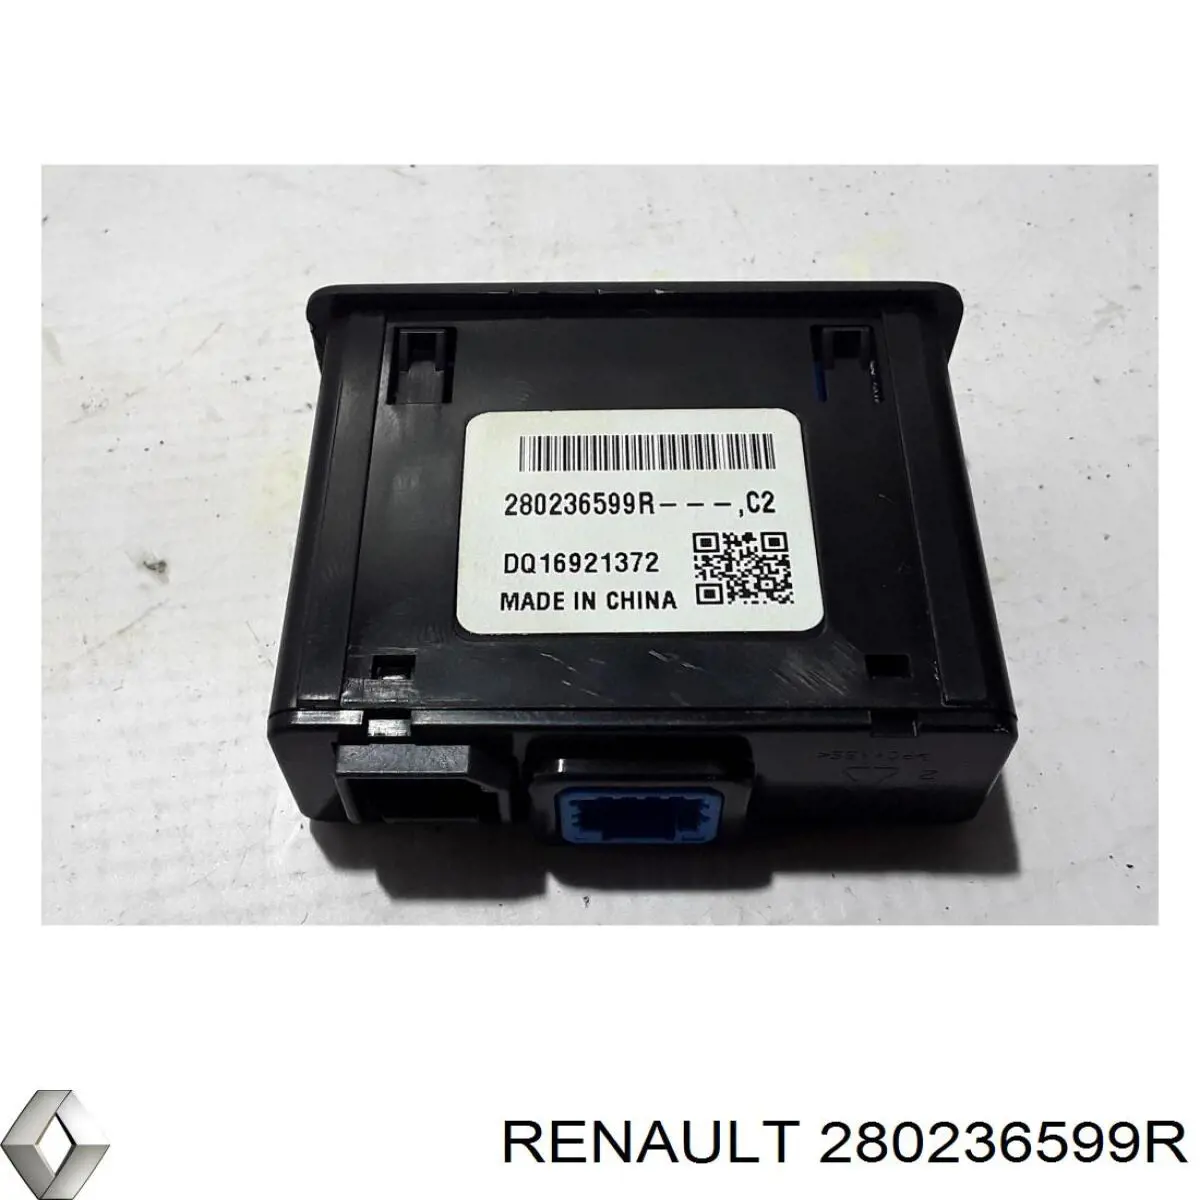 280239665R Renault (RVI) concentrador usb